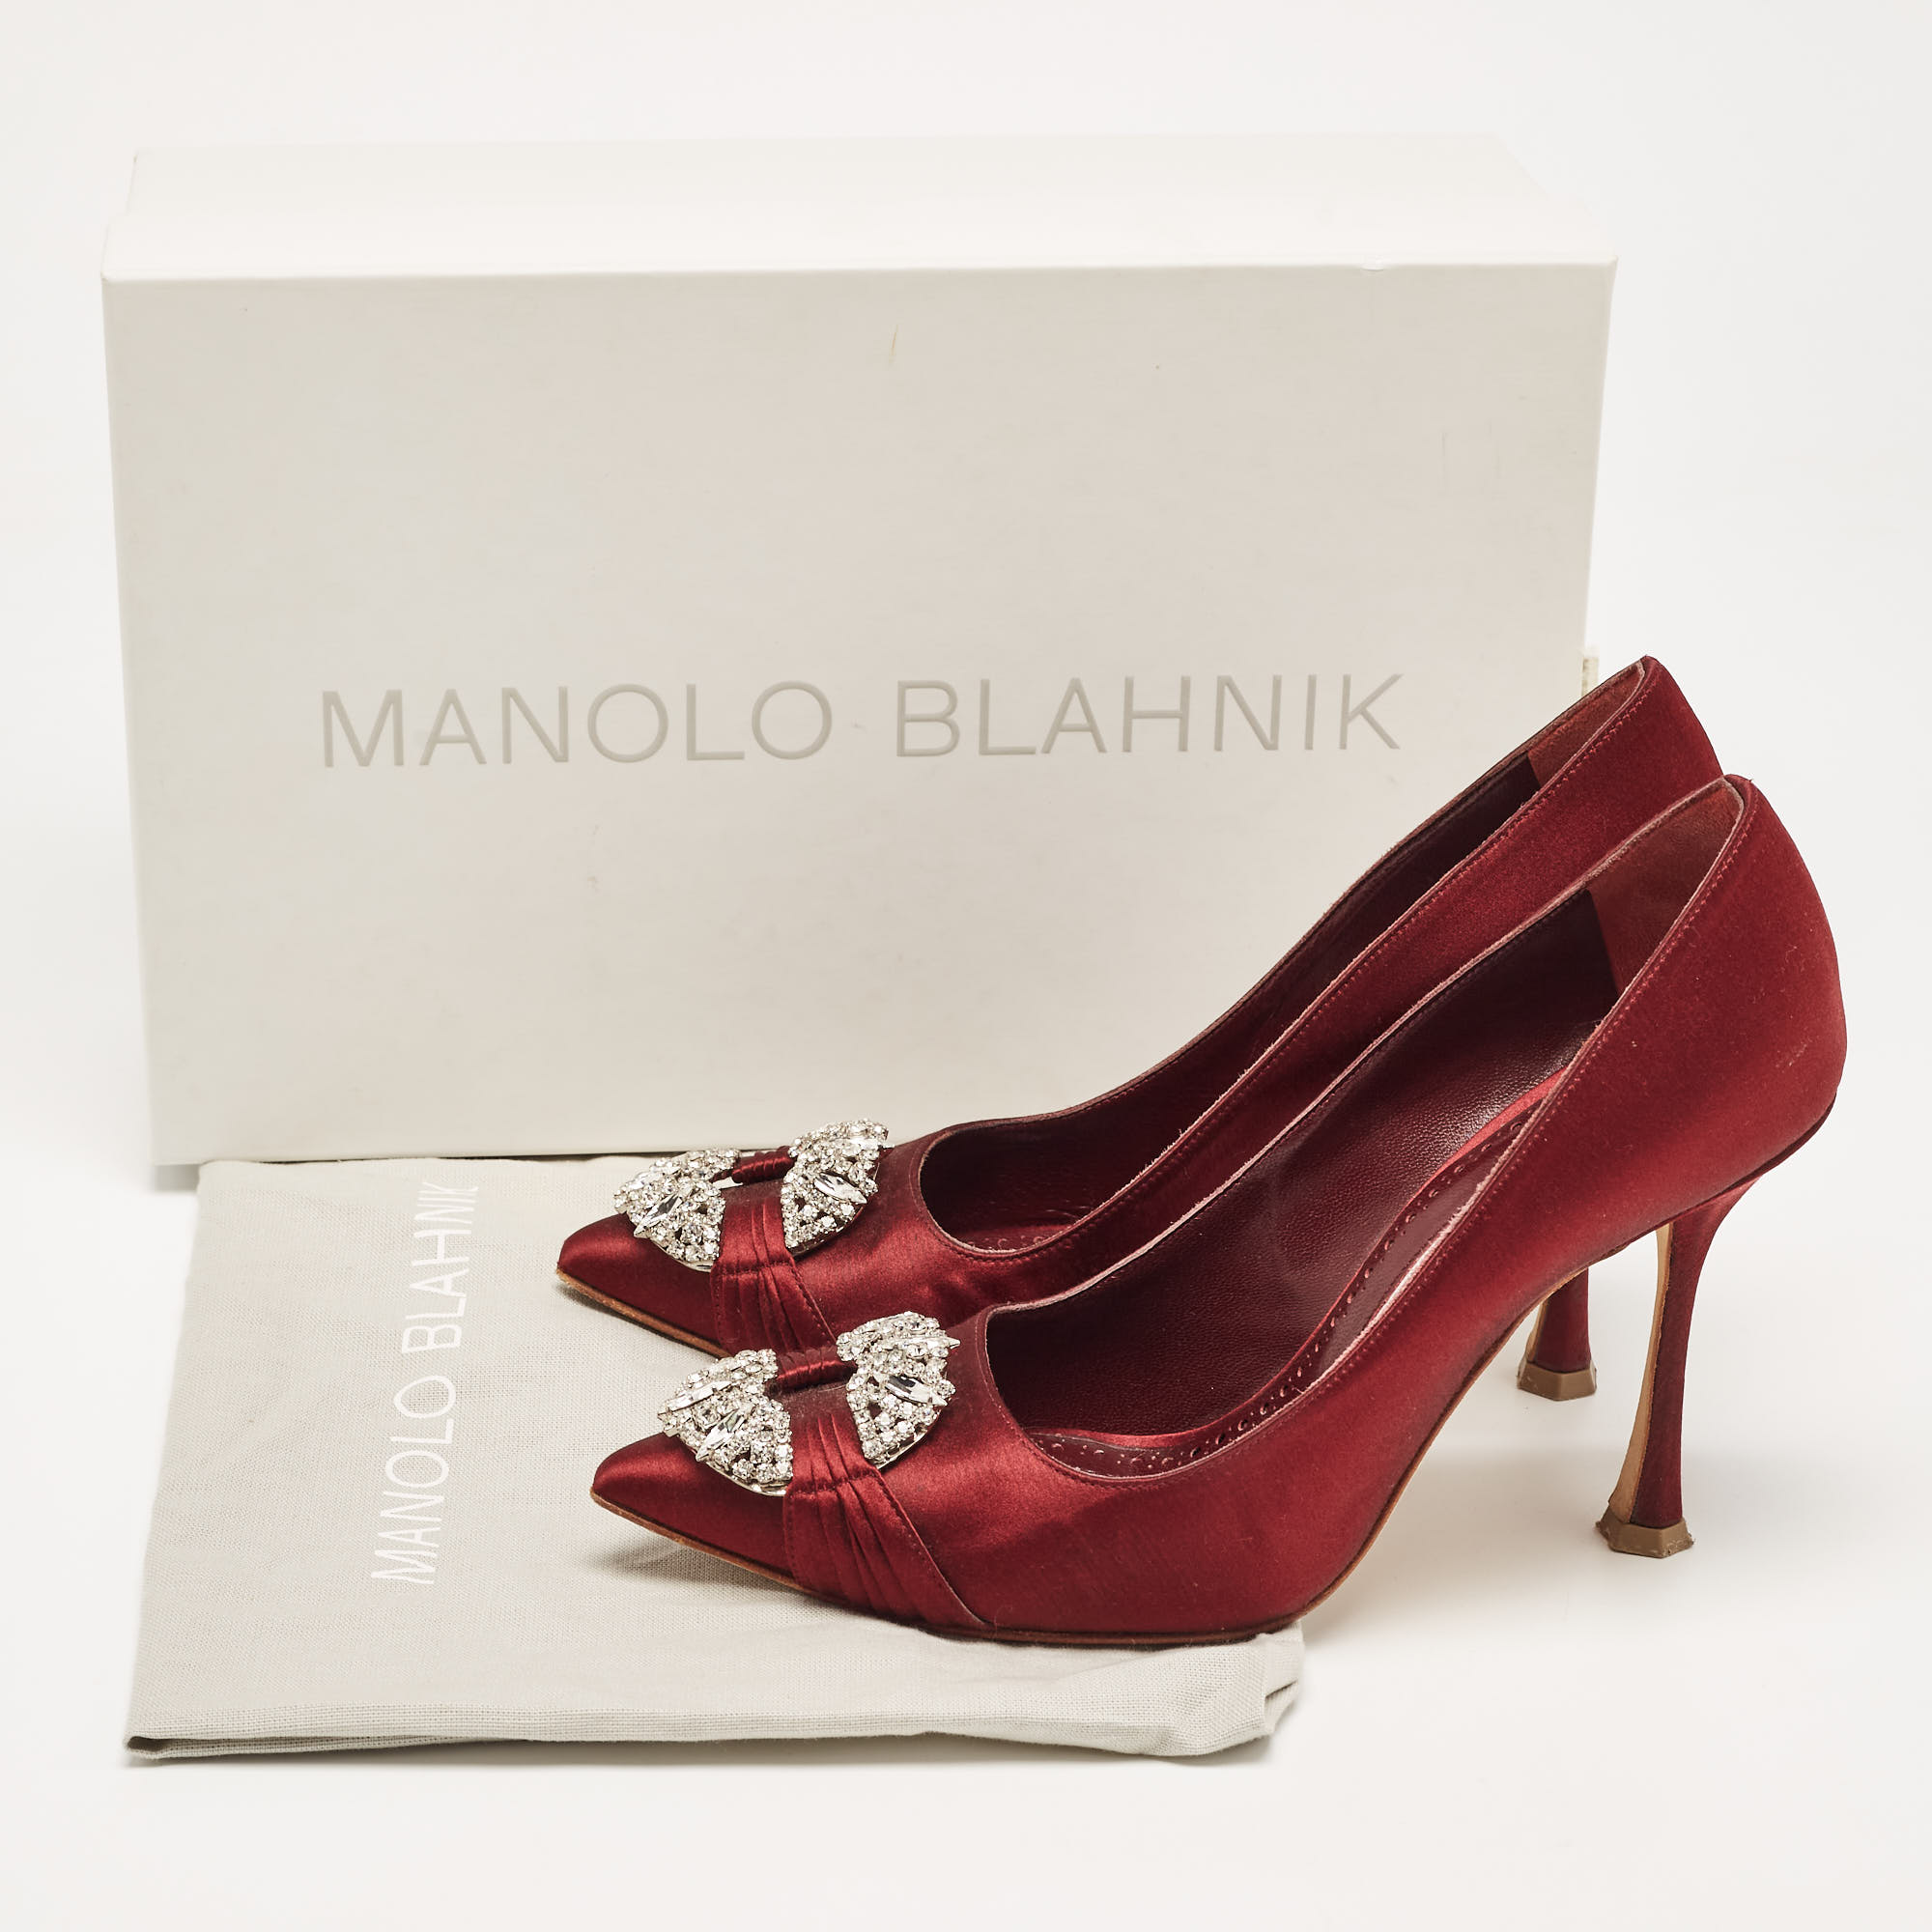 Manolo Blahnik Burgundy Satin Crystal Embellished Pointed Toe Pumps Size 36